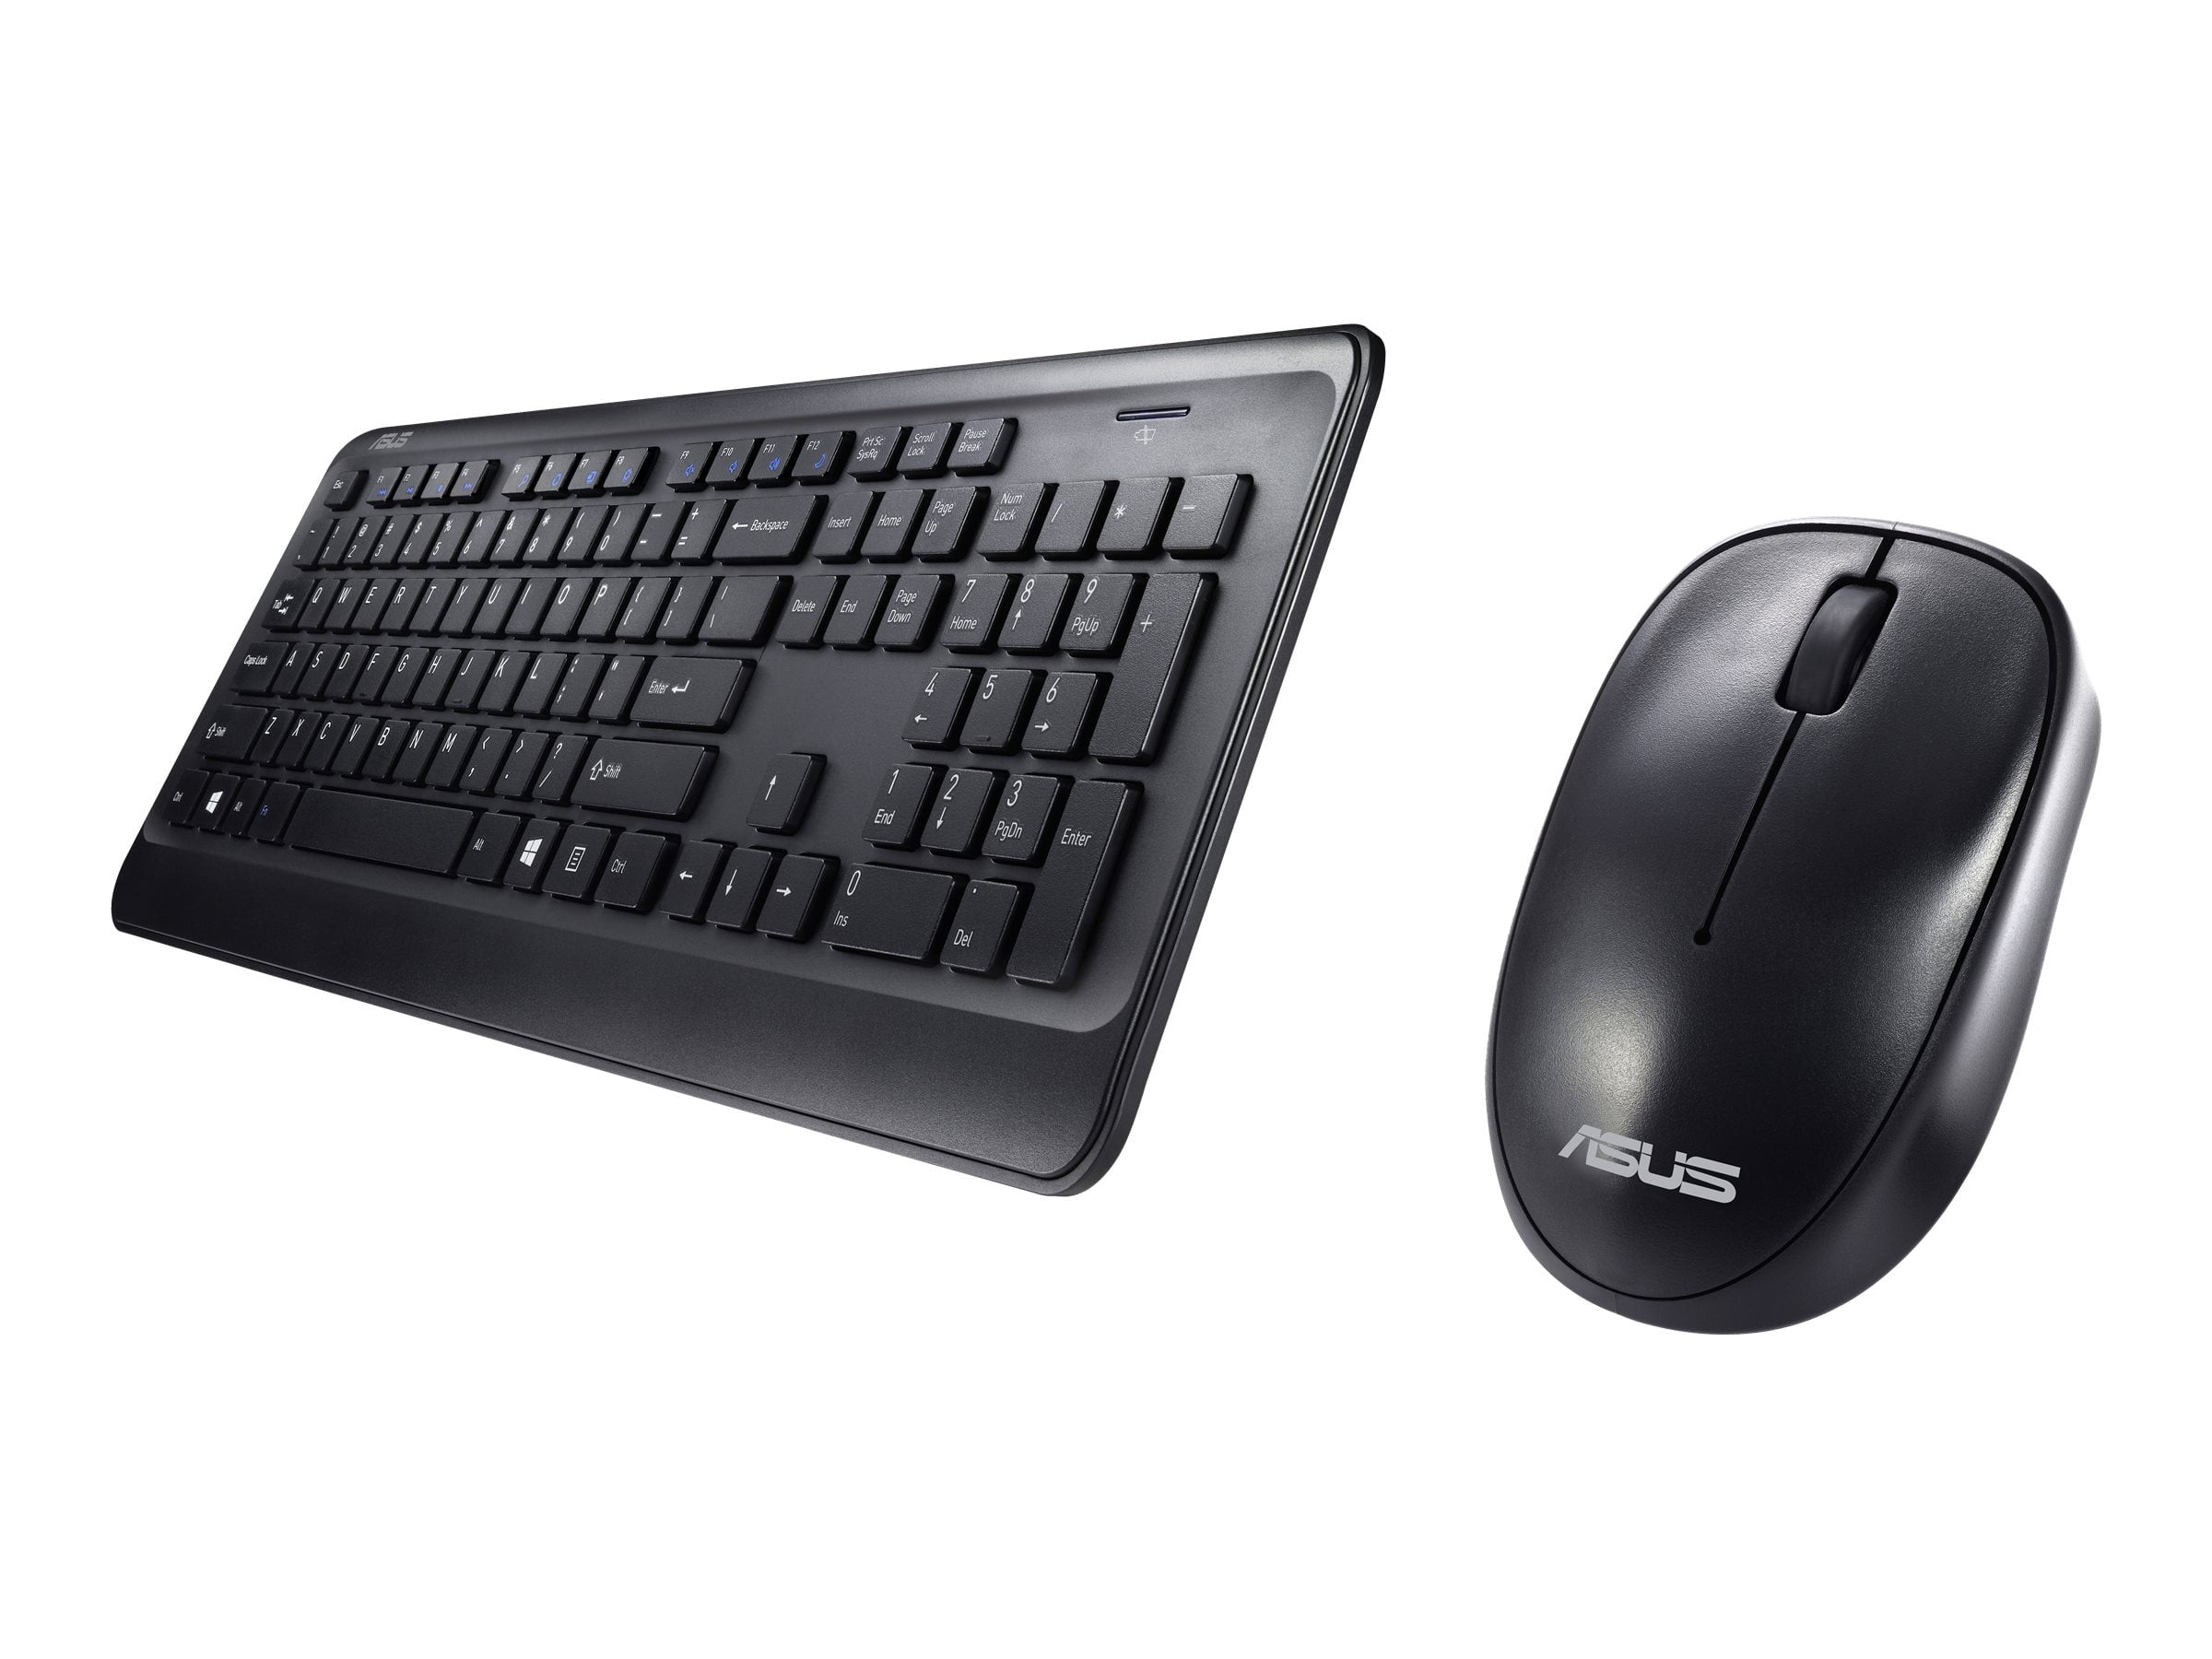 Asus W00 Keyboard And Mouse Set Wireless 2 4 Ghz Black Walmart Com Walmart Com